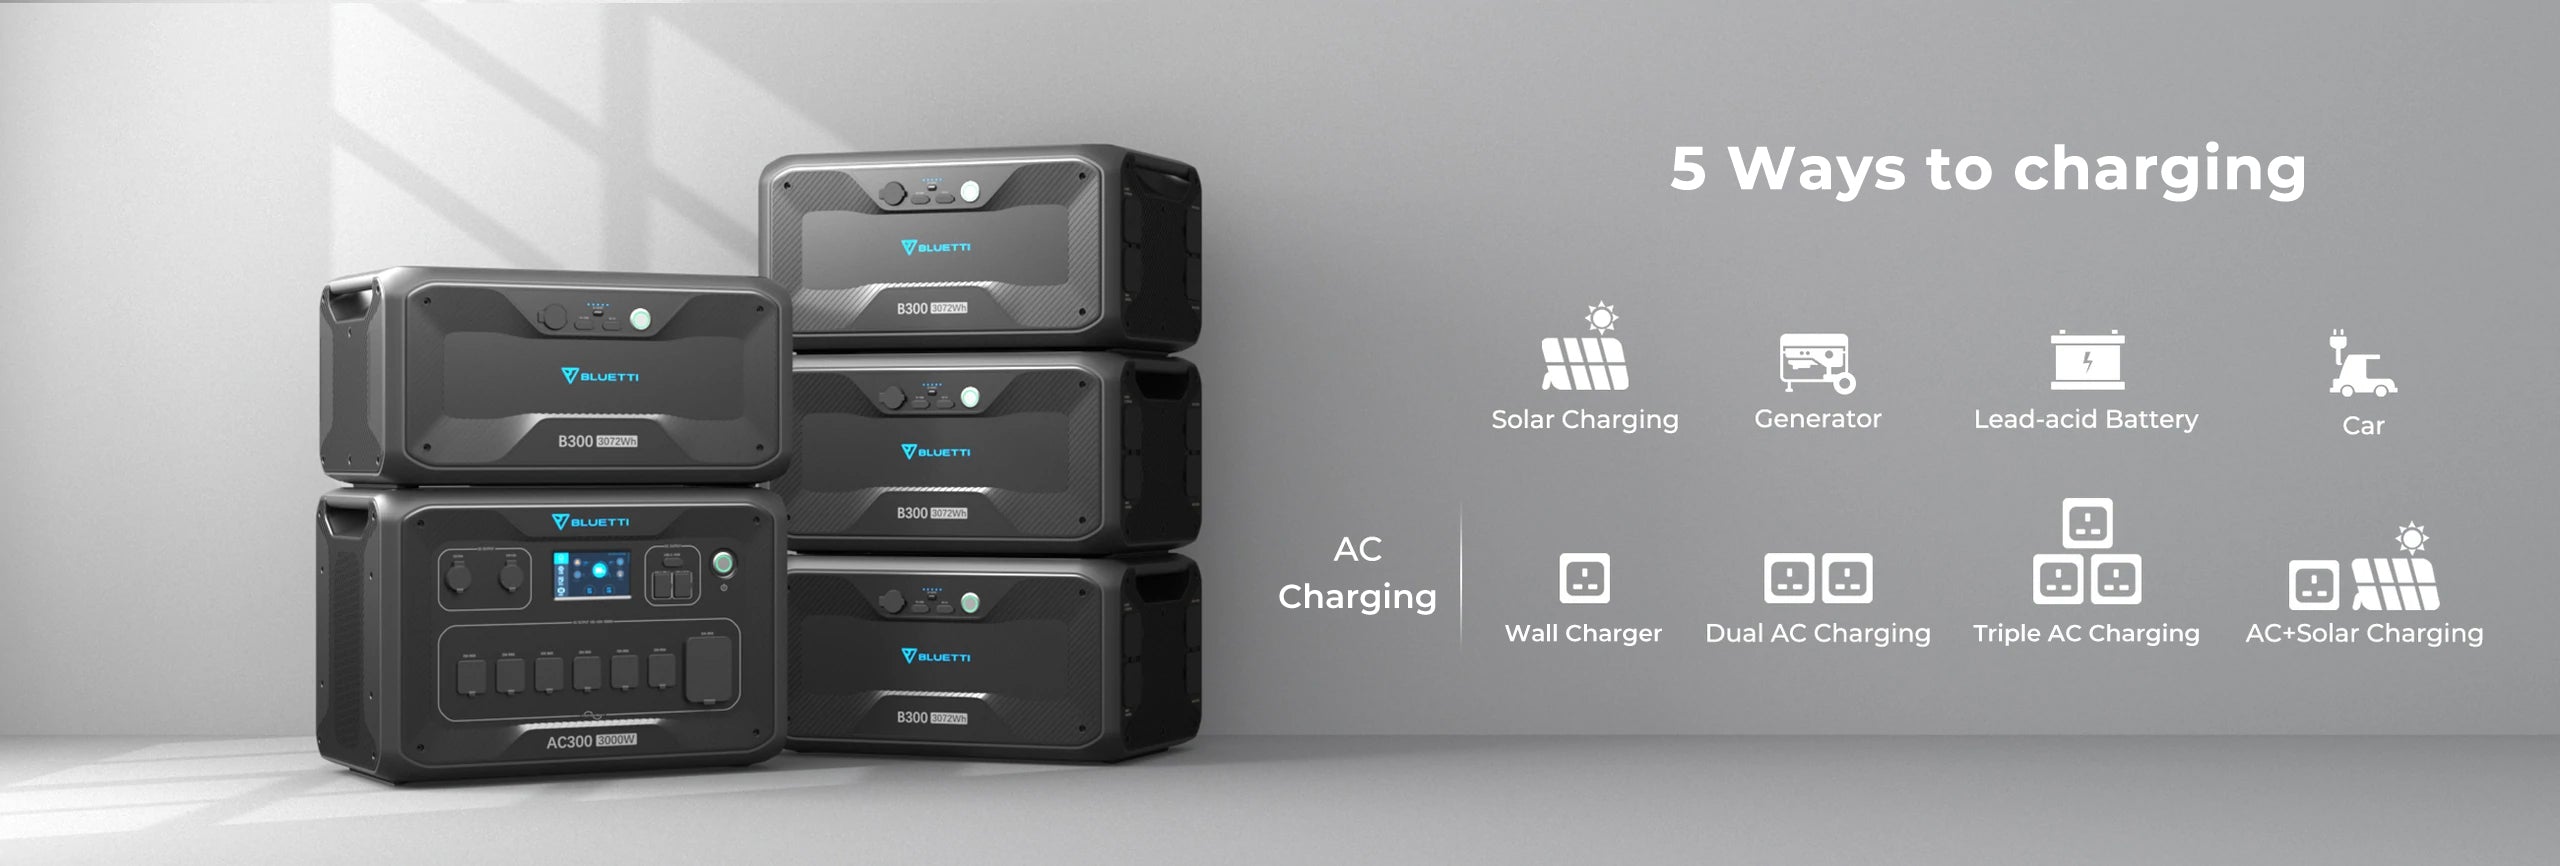 5 ways to charging bluetti solar kit